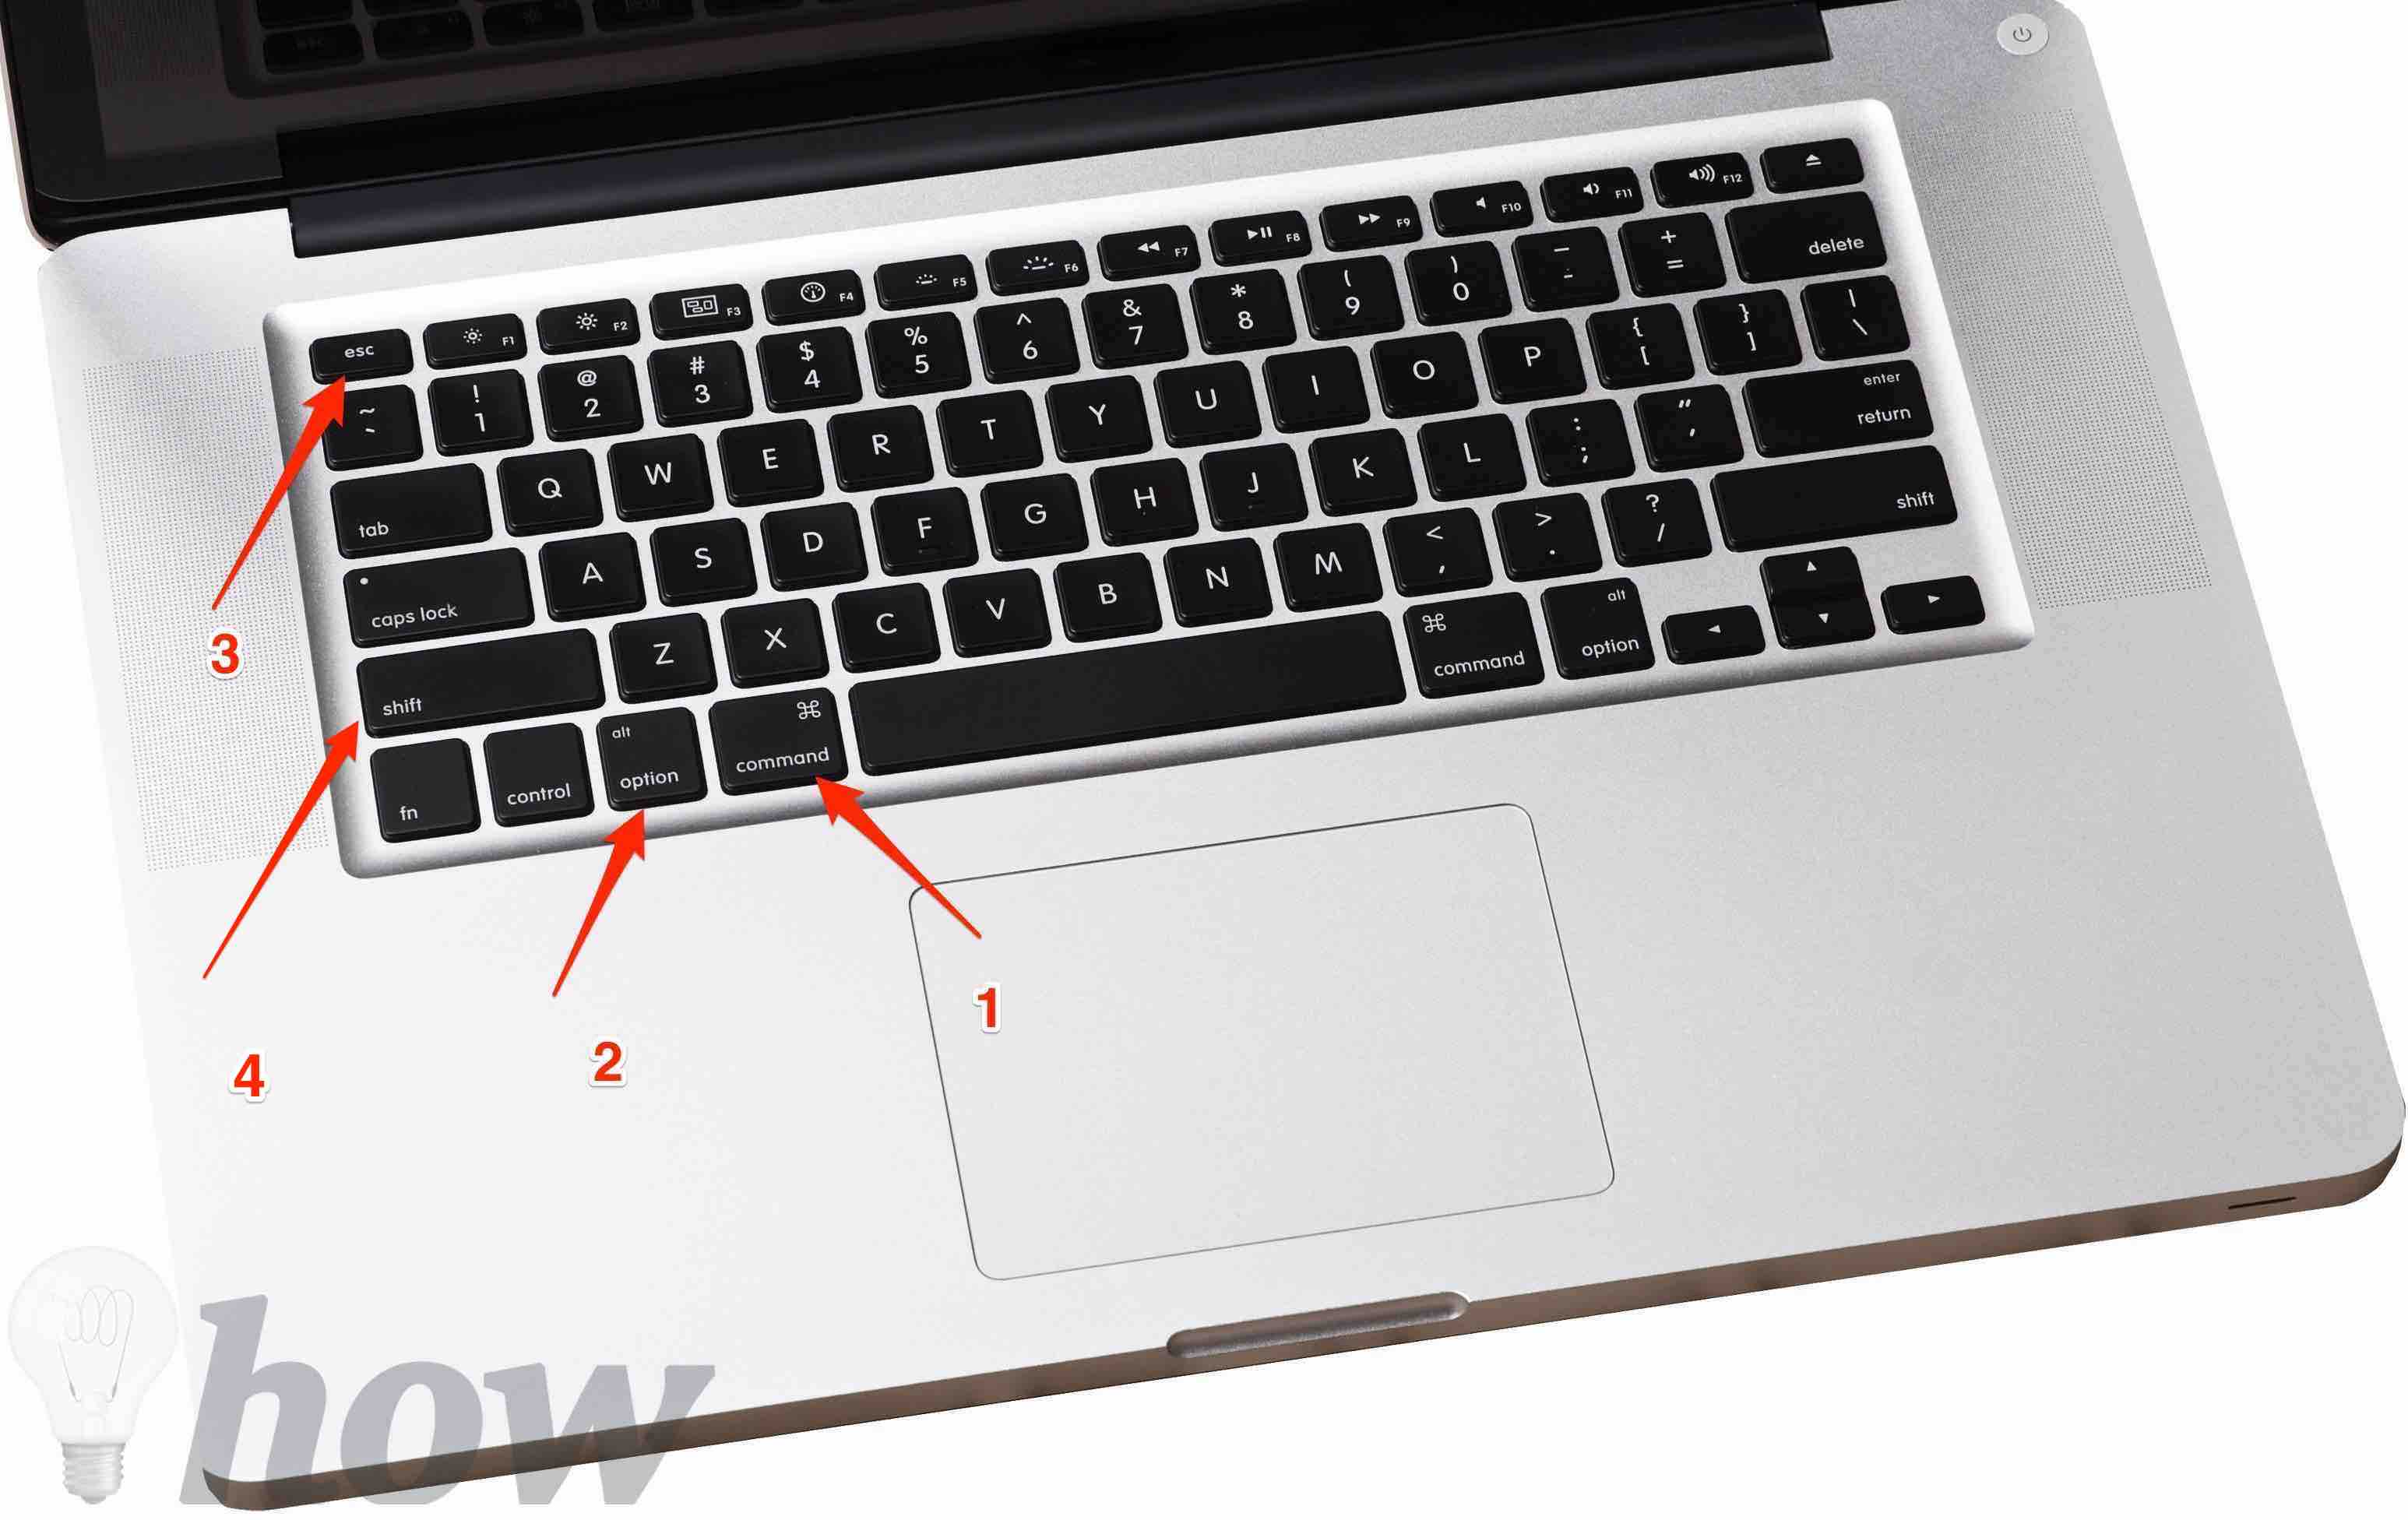 Keyboard shortcut for force quit mac